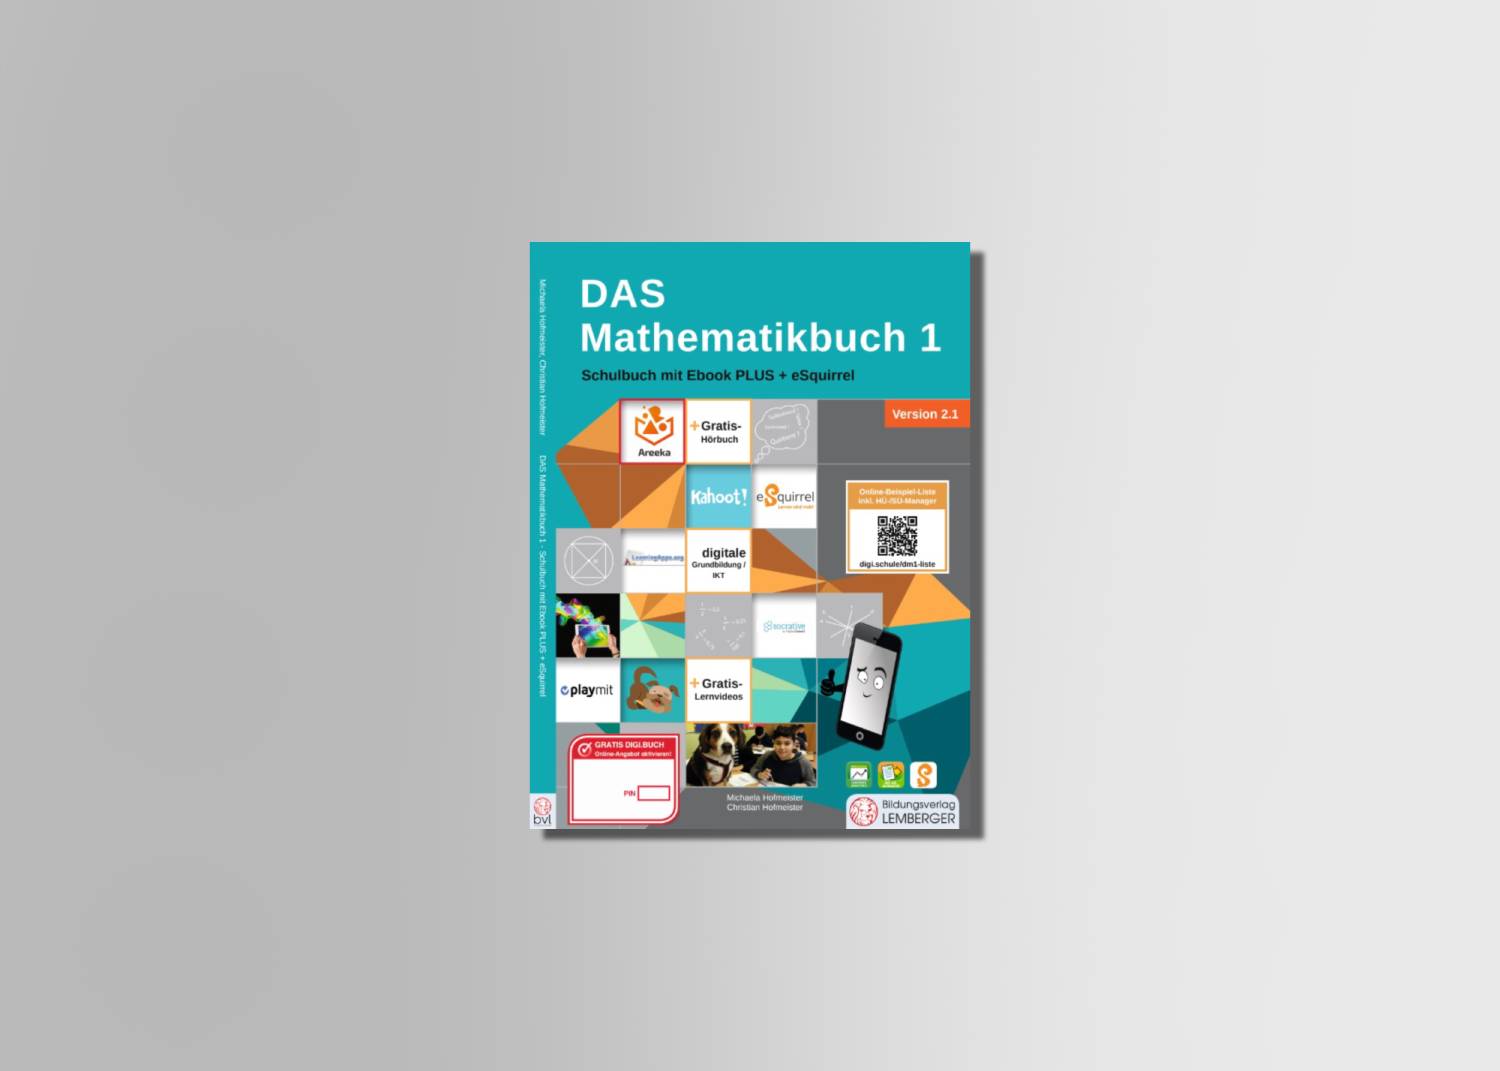 Areeka Augmented Reality Schulbuch - BVL DAS Mathematikbuch 1